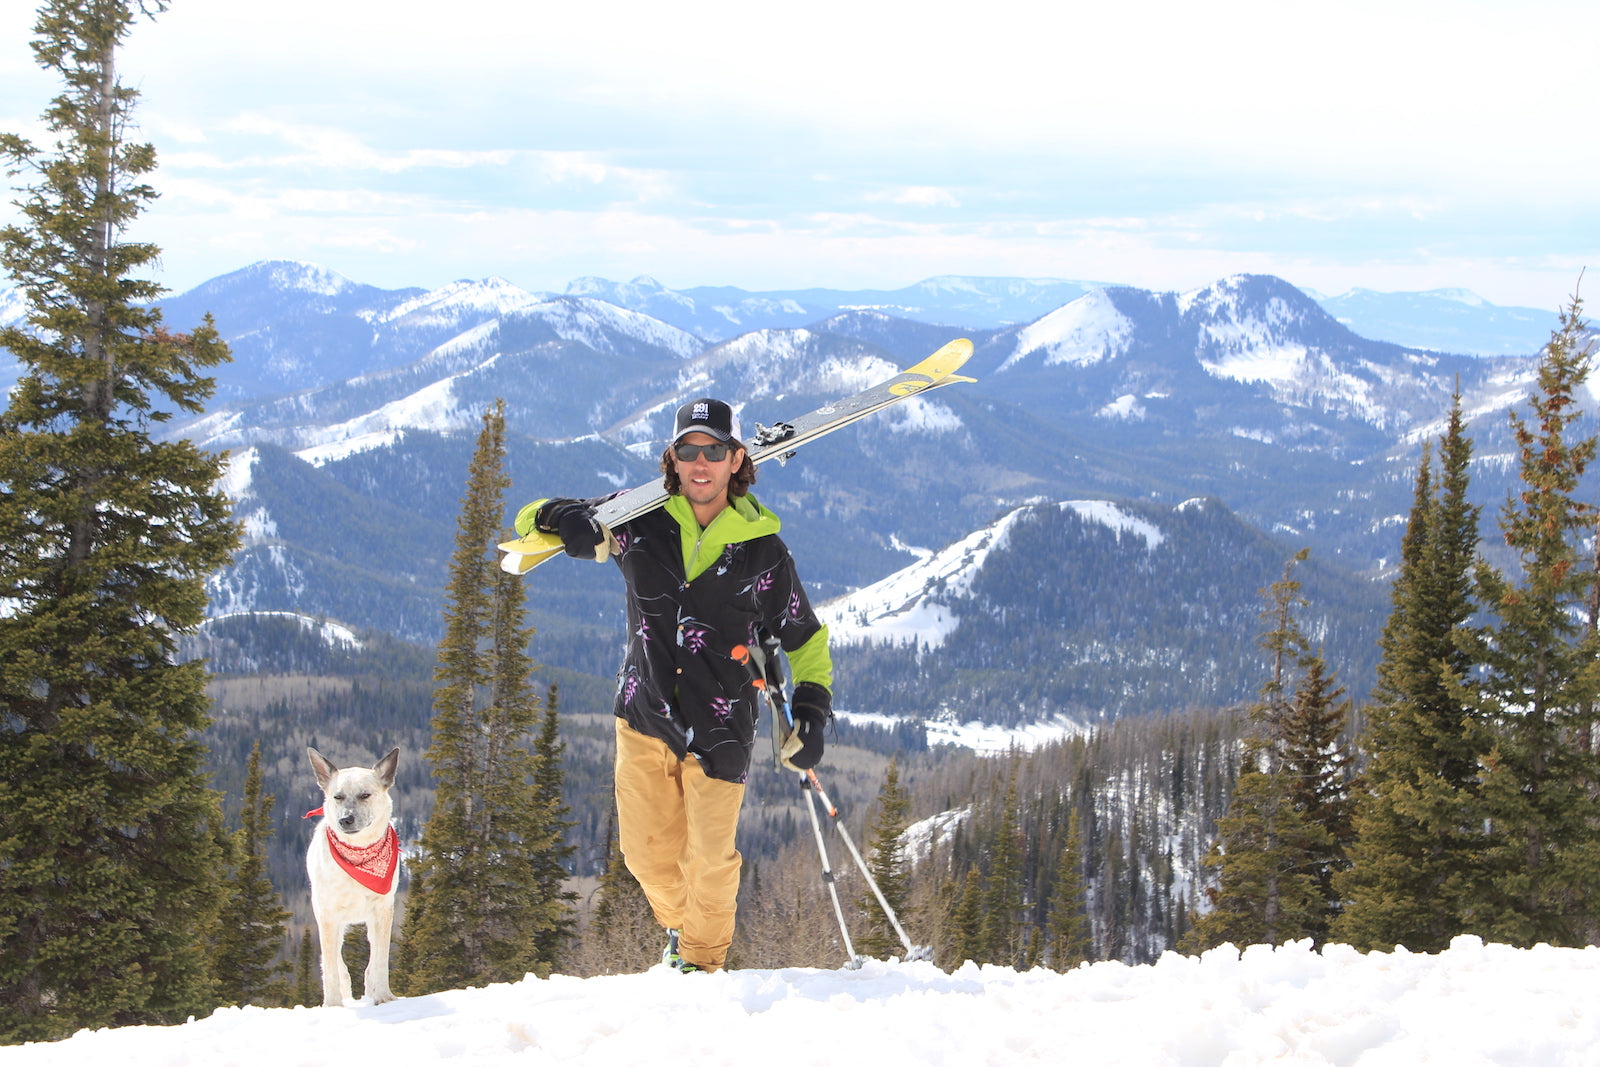 Backcountry ski safety